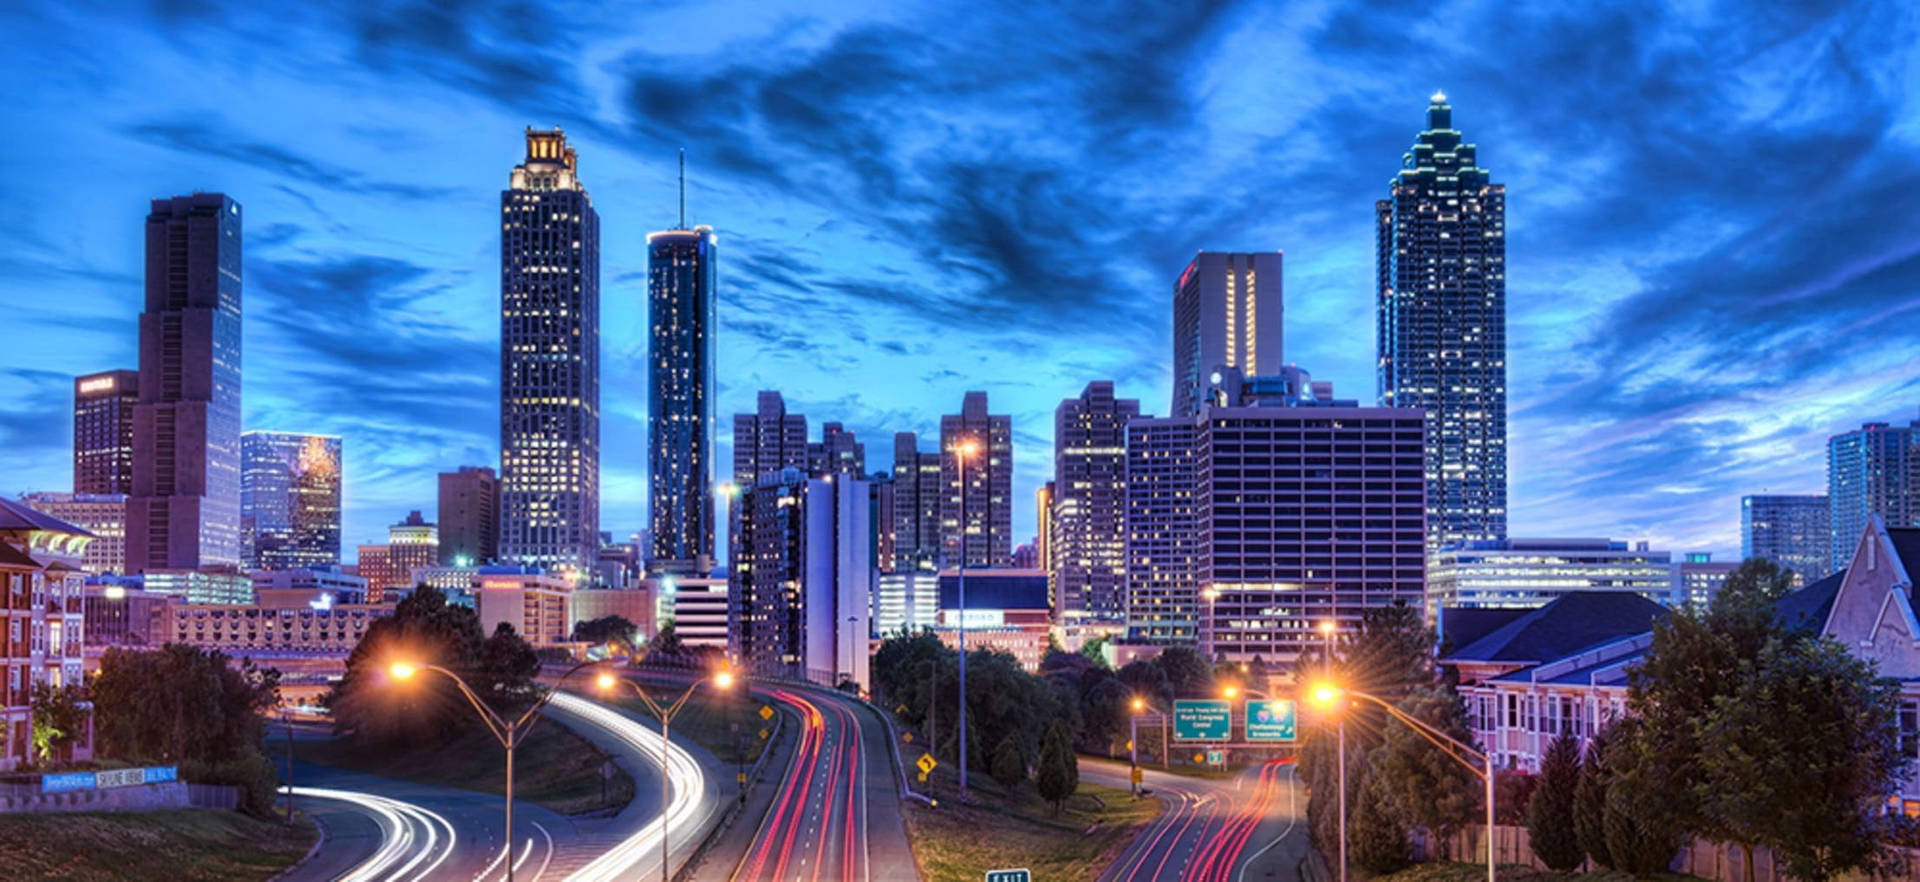 Atlanta Georgia City Lights Wallpaper